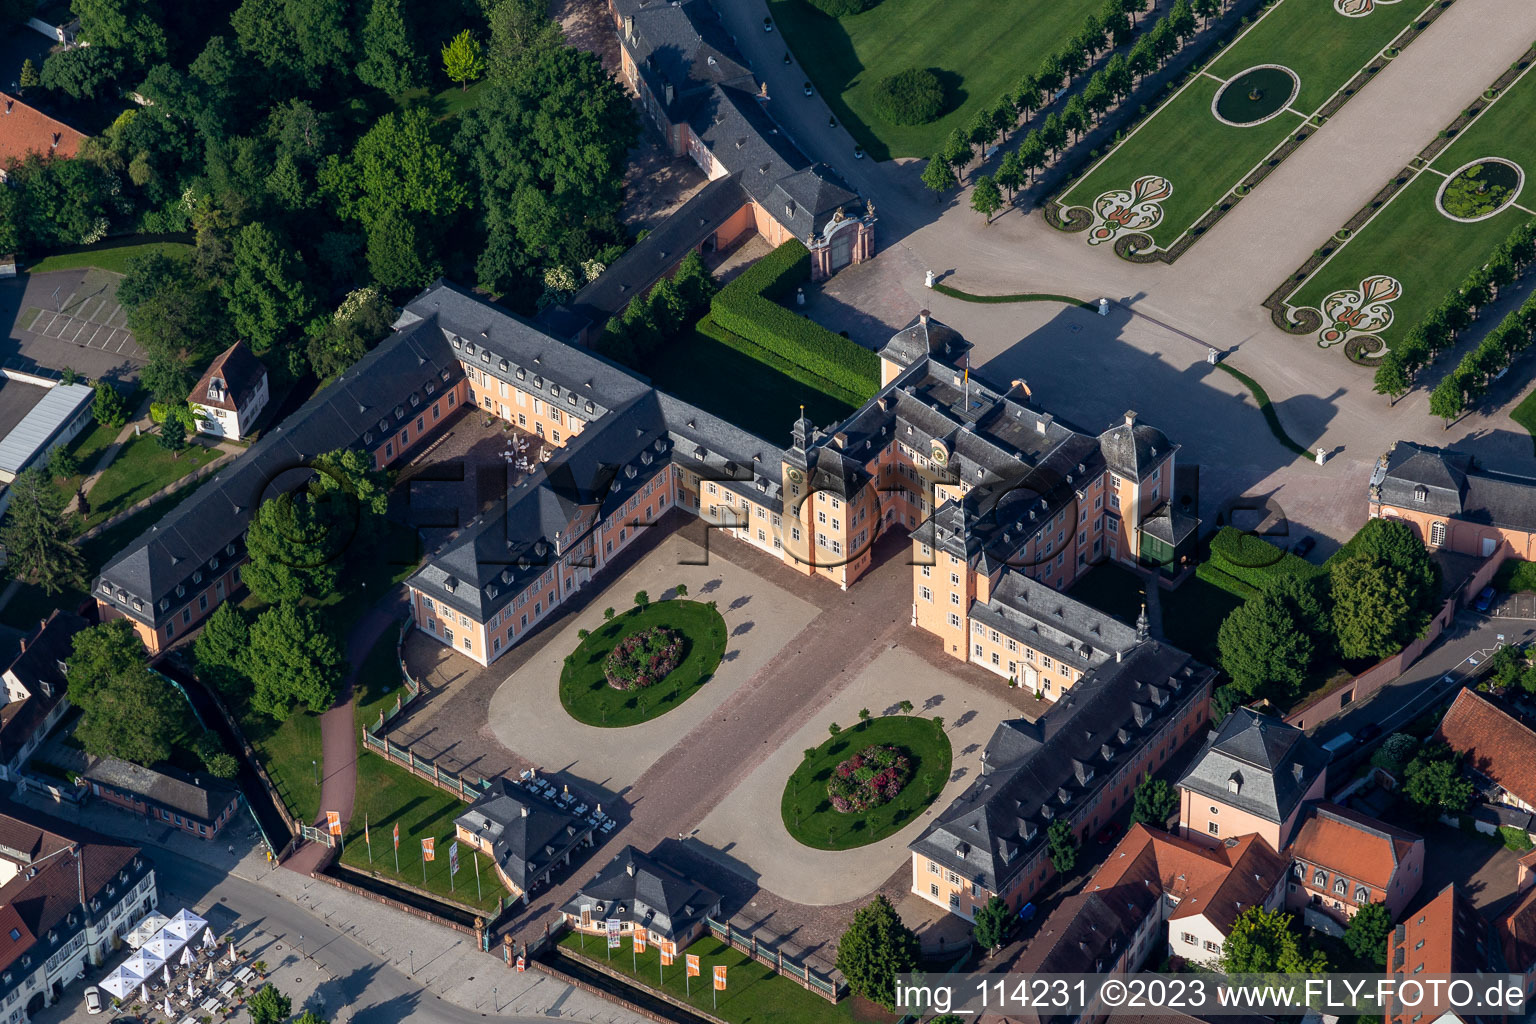 Aerial view of Schwetzingen Castle and the French baroque garden in Schwetzingen in the state of Baden-Wuerttemberg